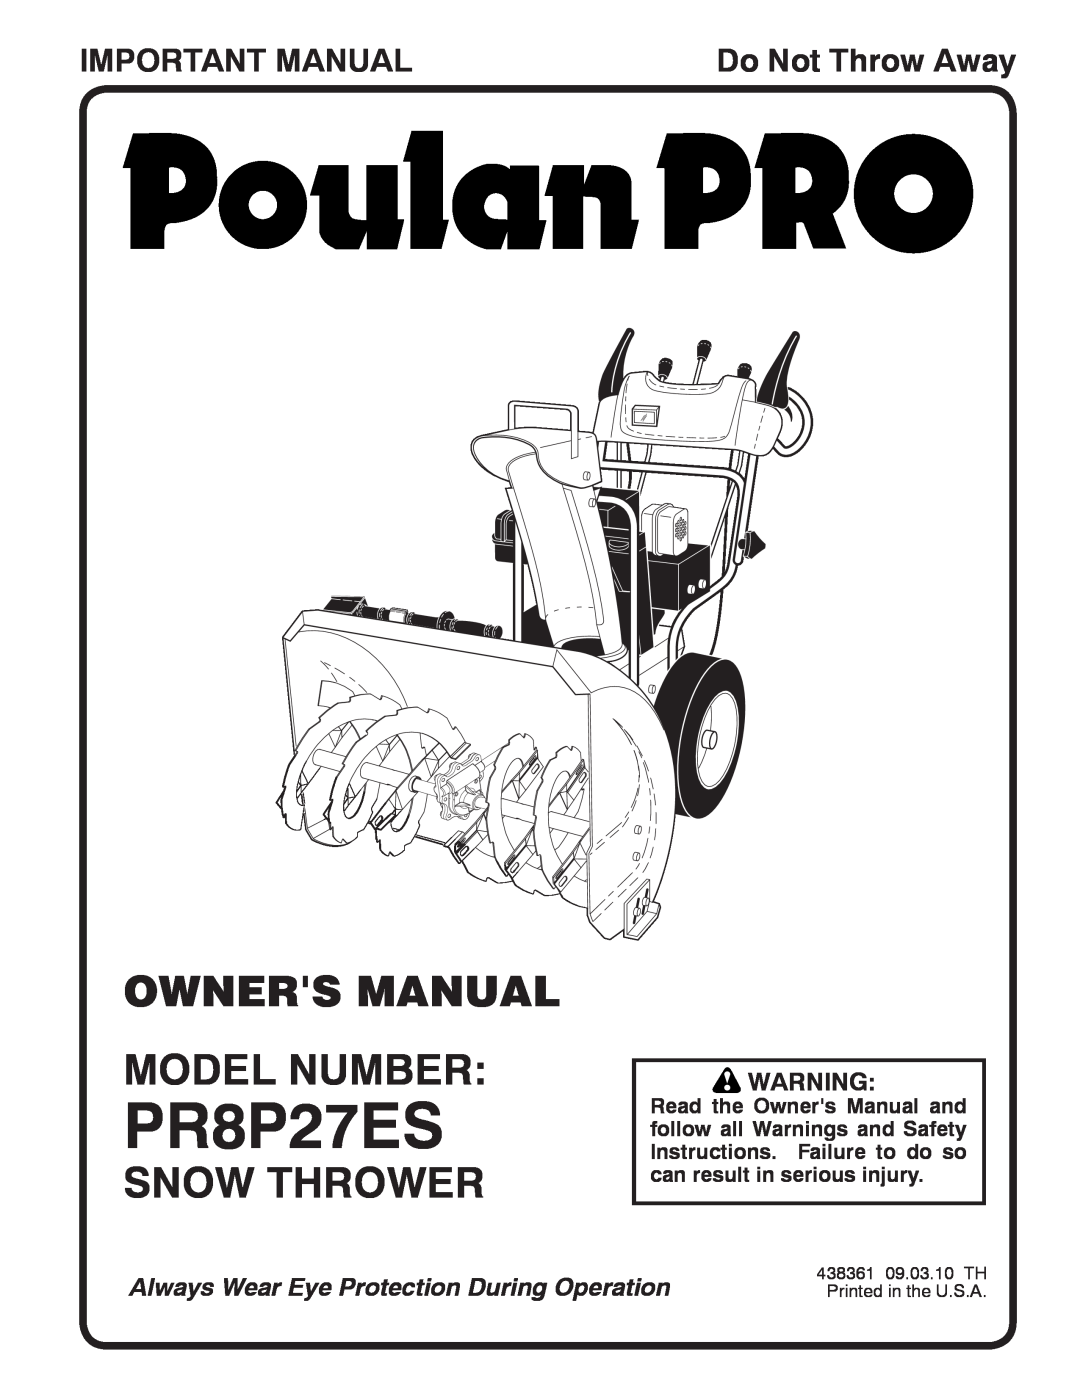 Poulan 96192004600, 438361 owner manual Snow Thrower, Important Manual, PR8P27ES, Do Not Throw Away 